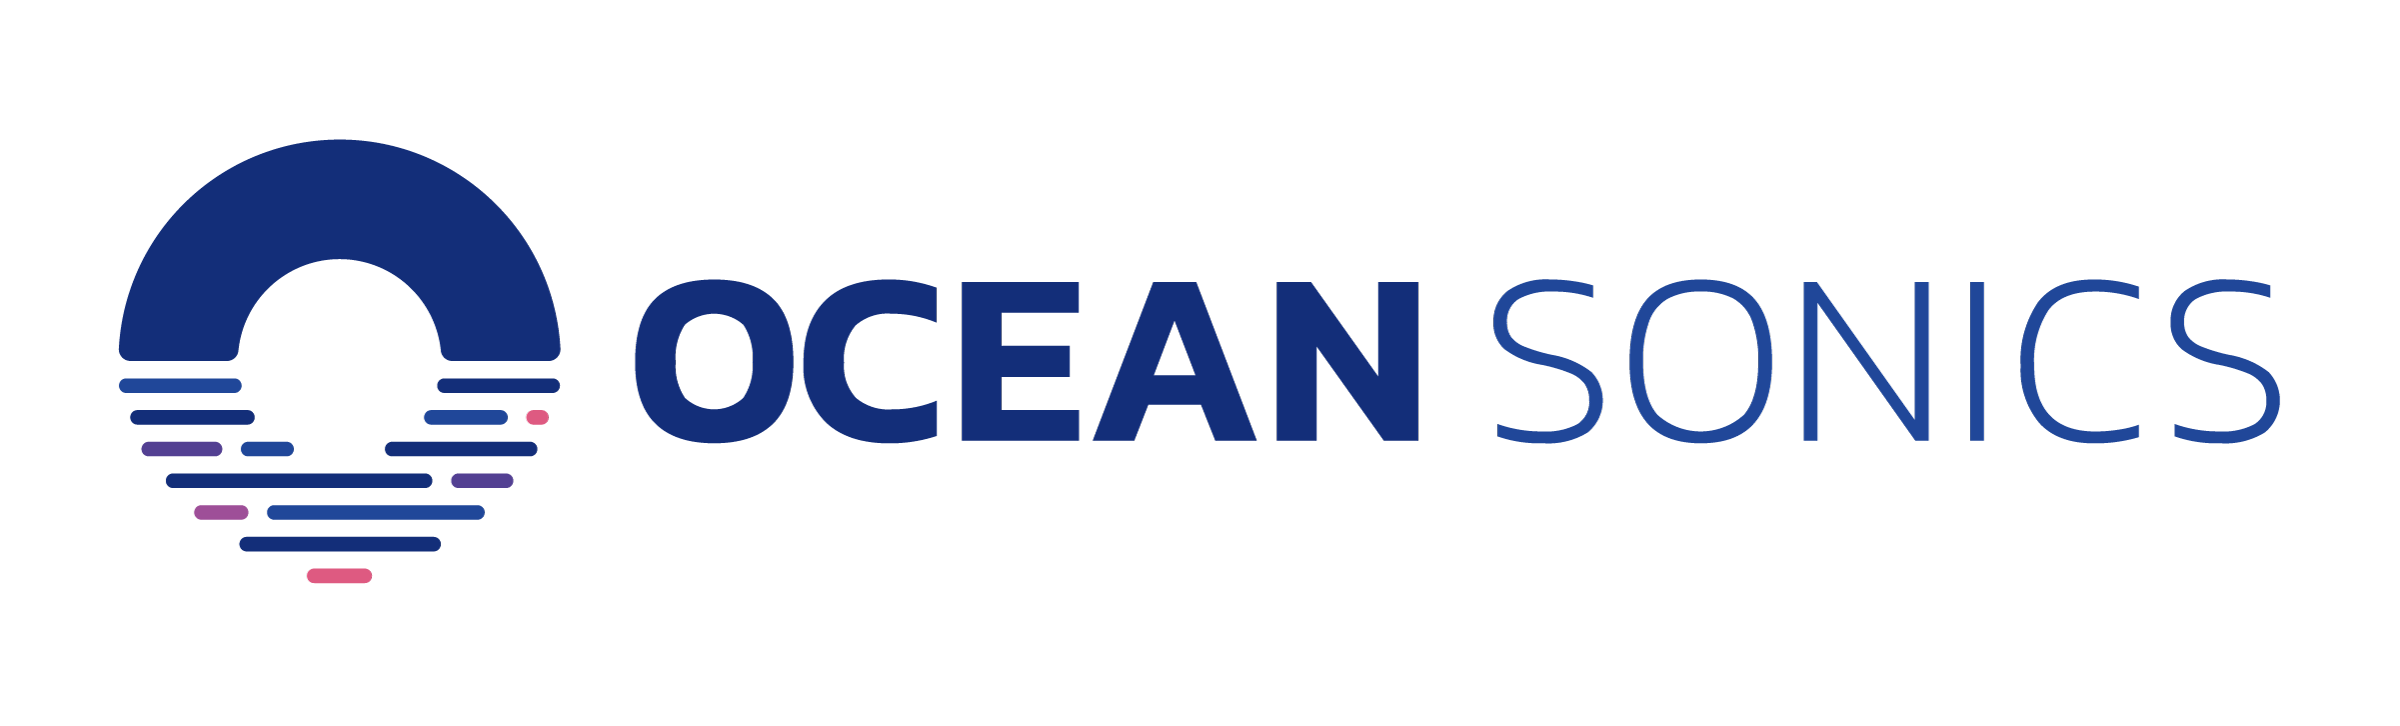 ocean-sonics-logo.png